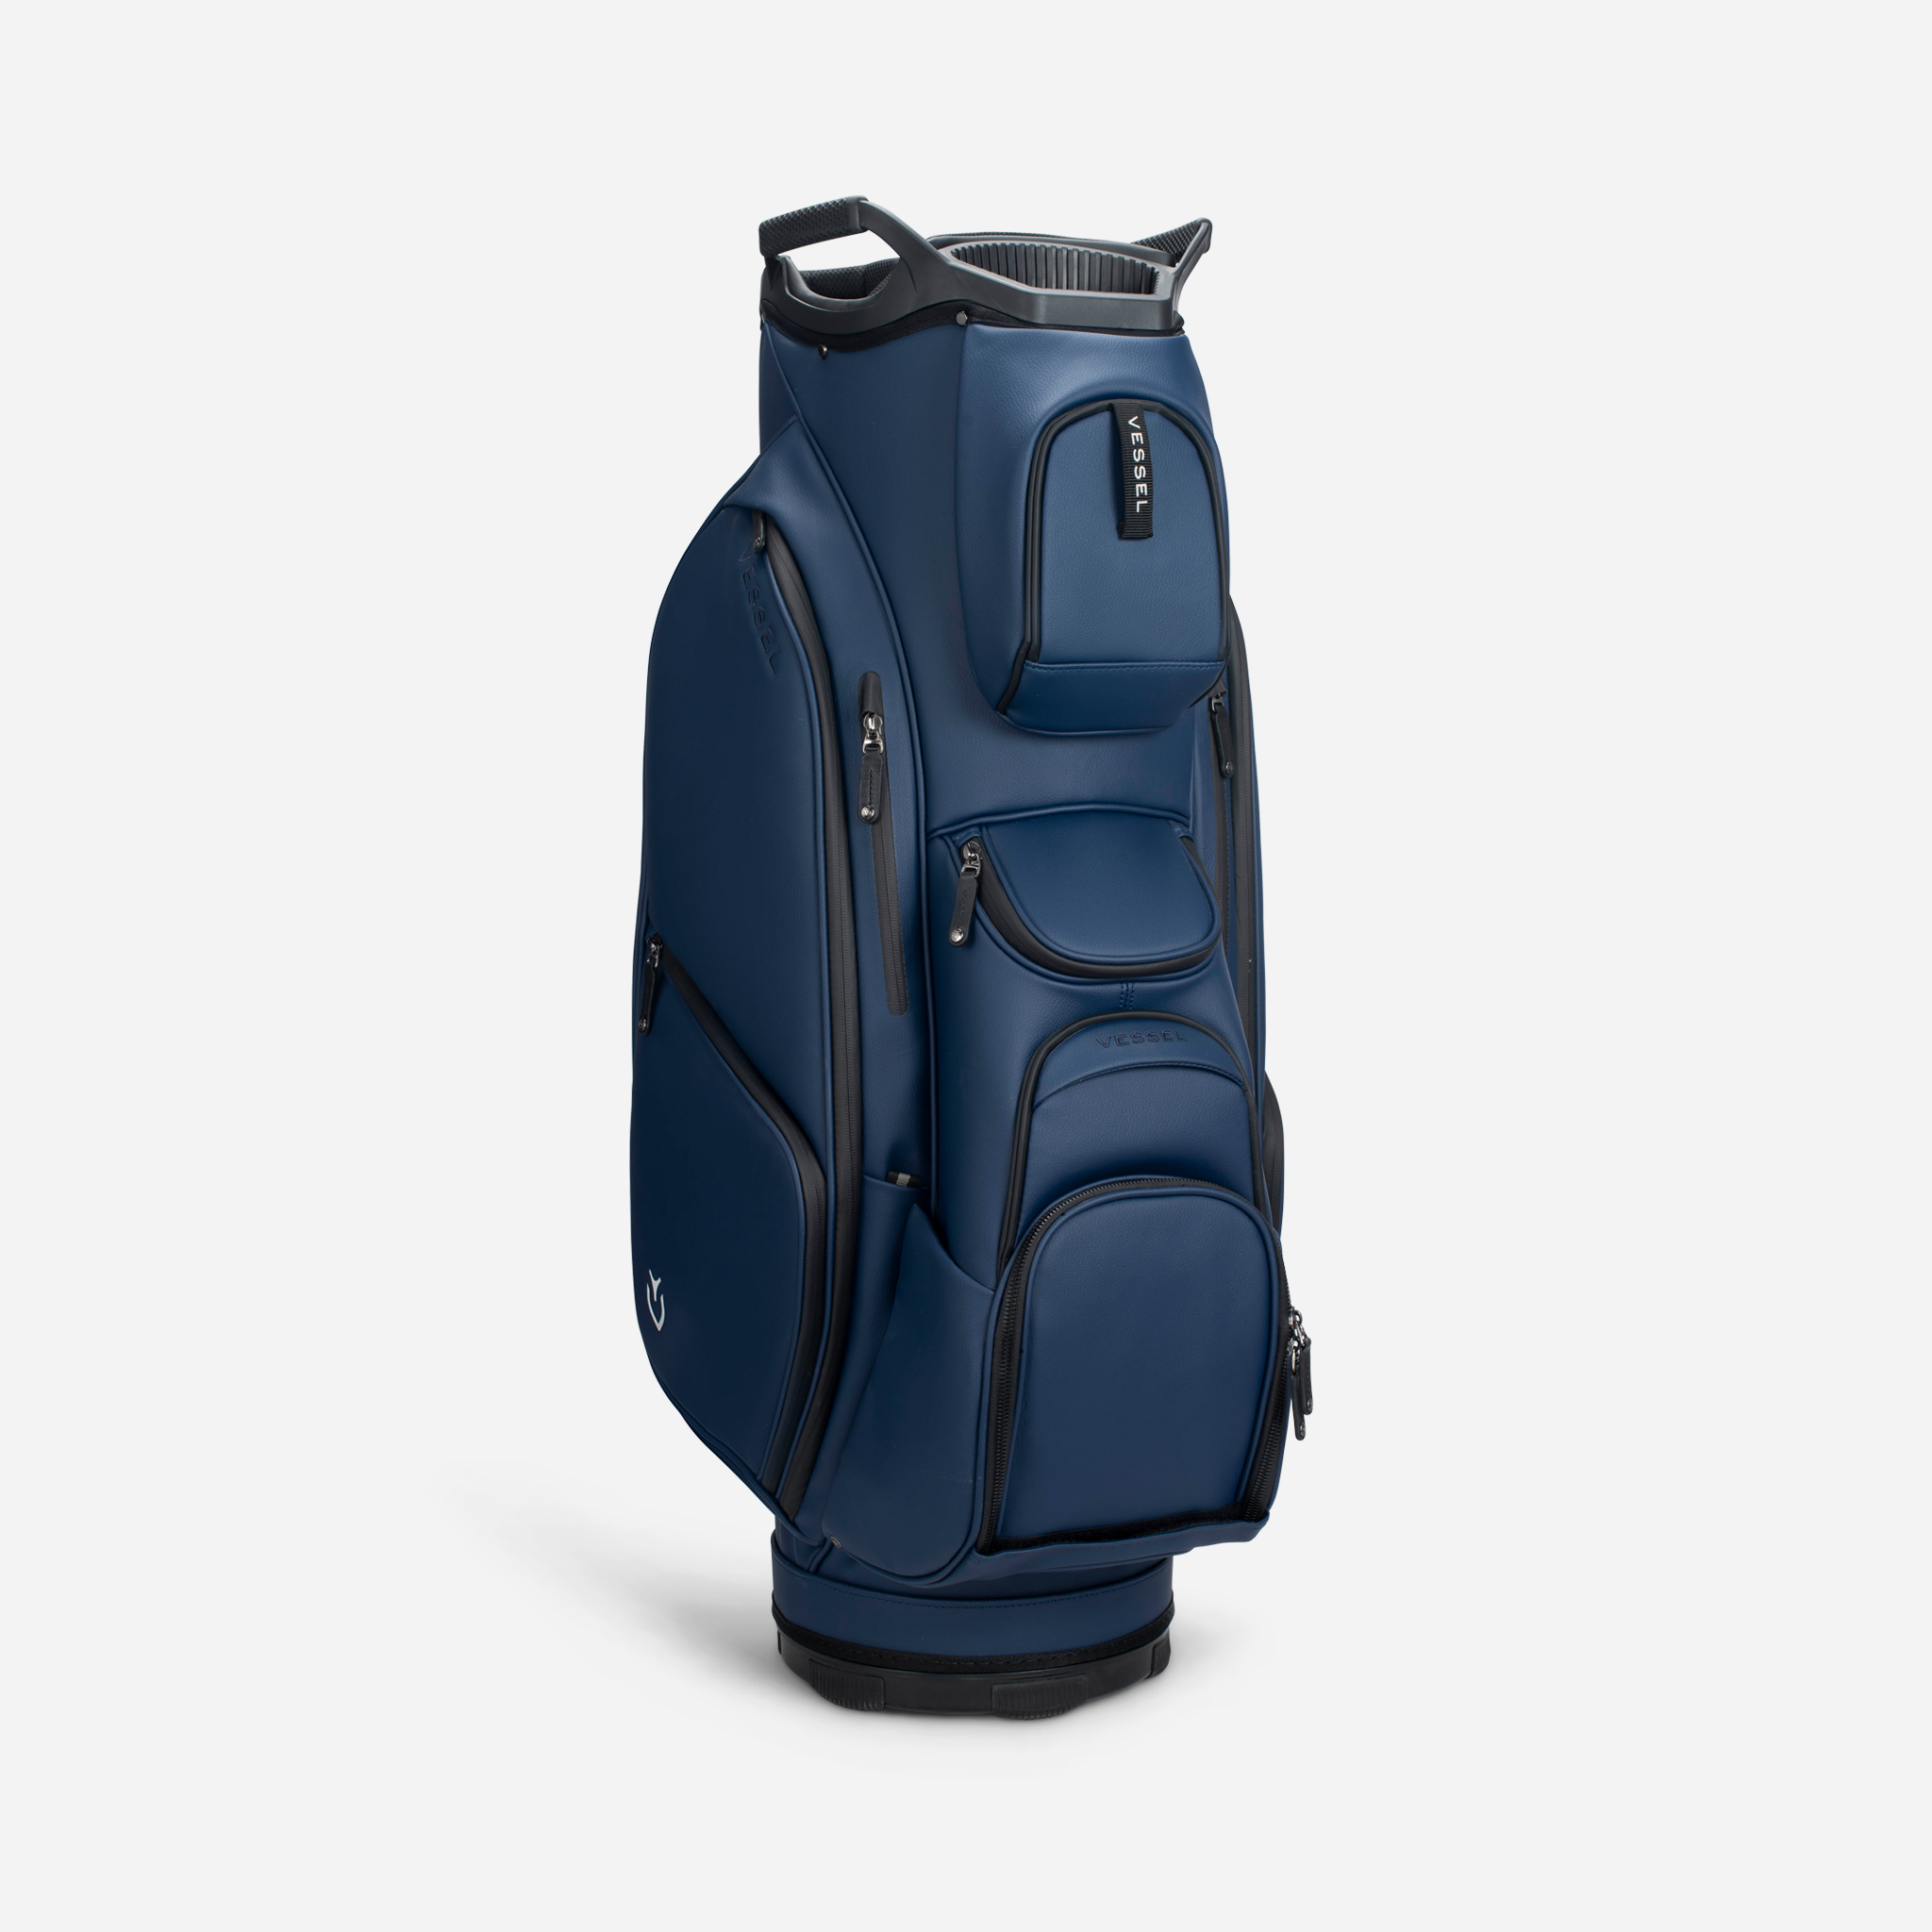 Travel with Purpose with Vessel's Minimalist Premium Bags - Travel